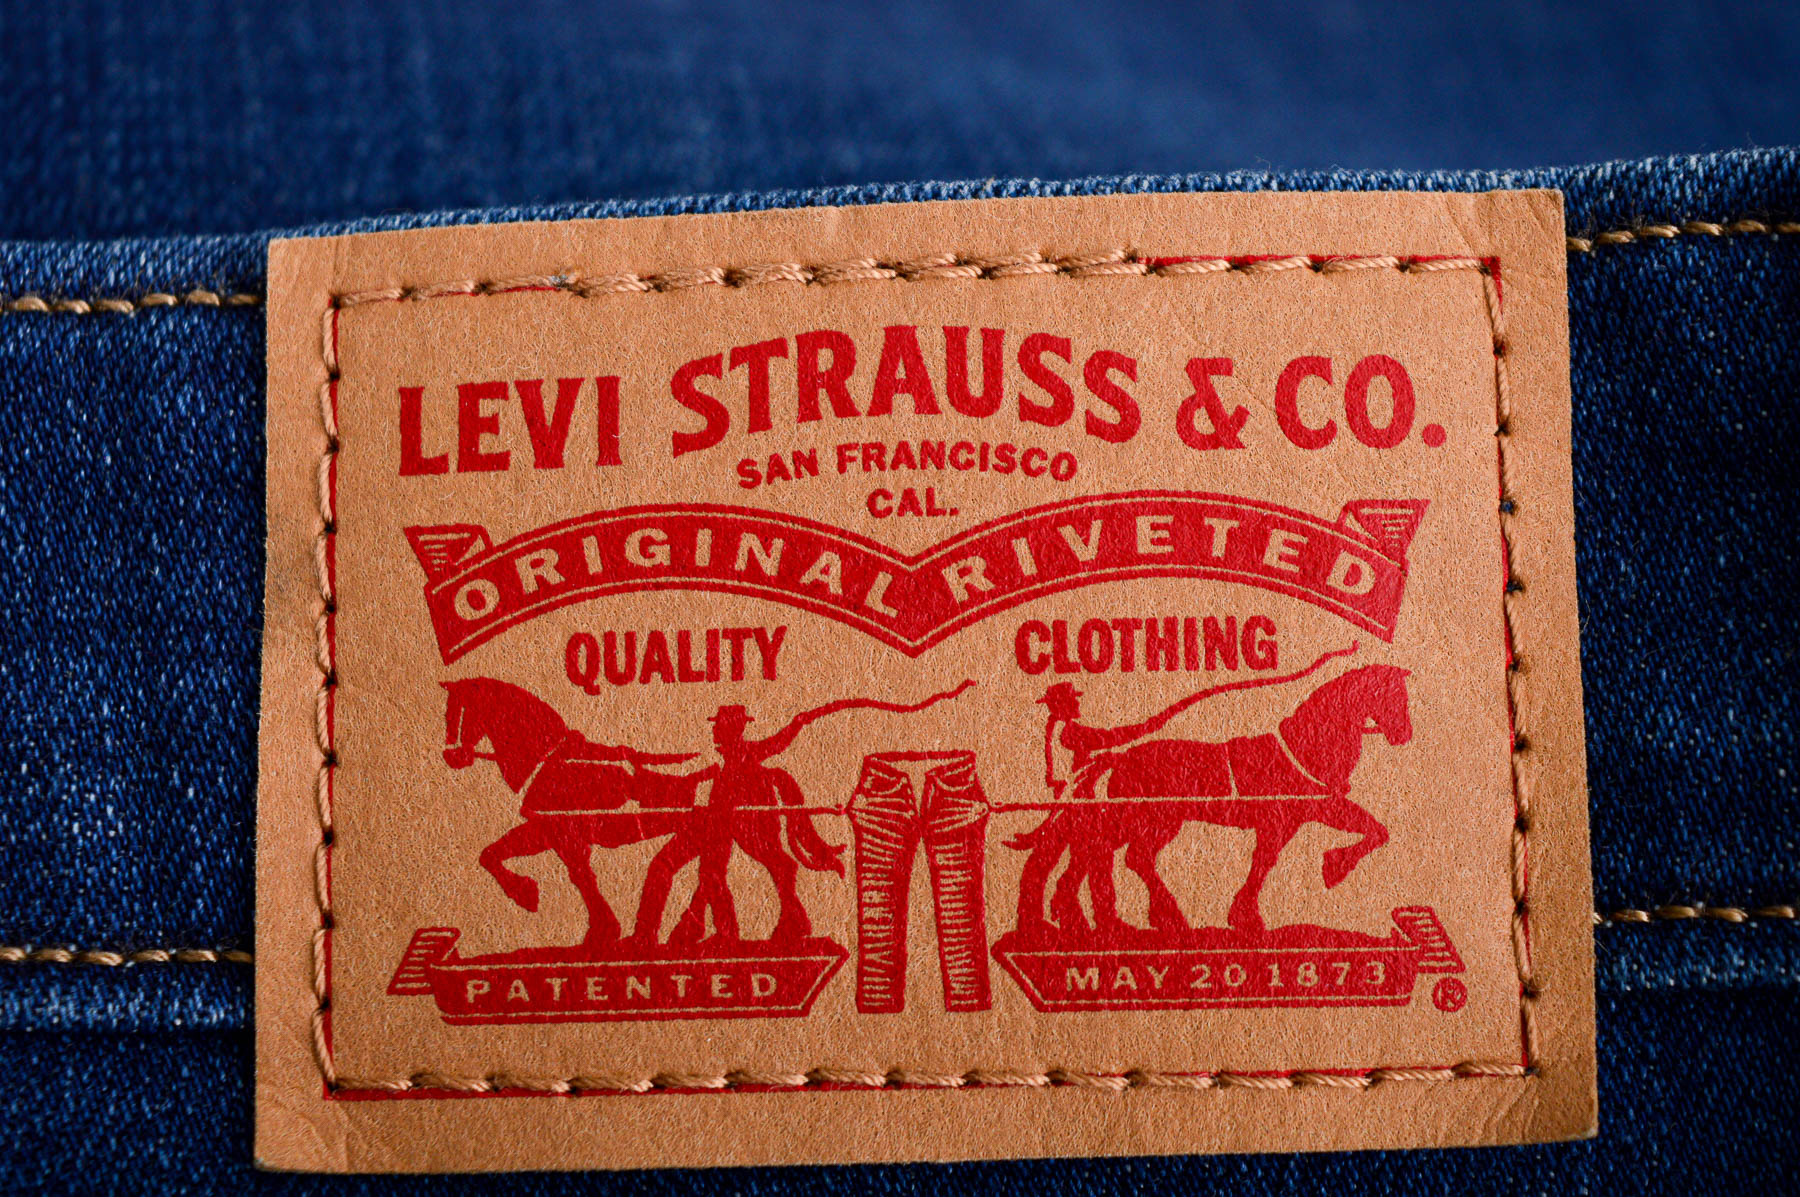 Denim skirt - Levi Strauss & Co. - 2